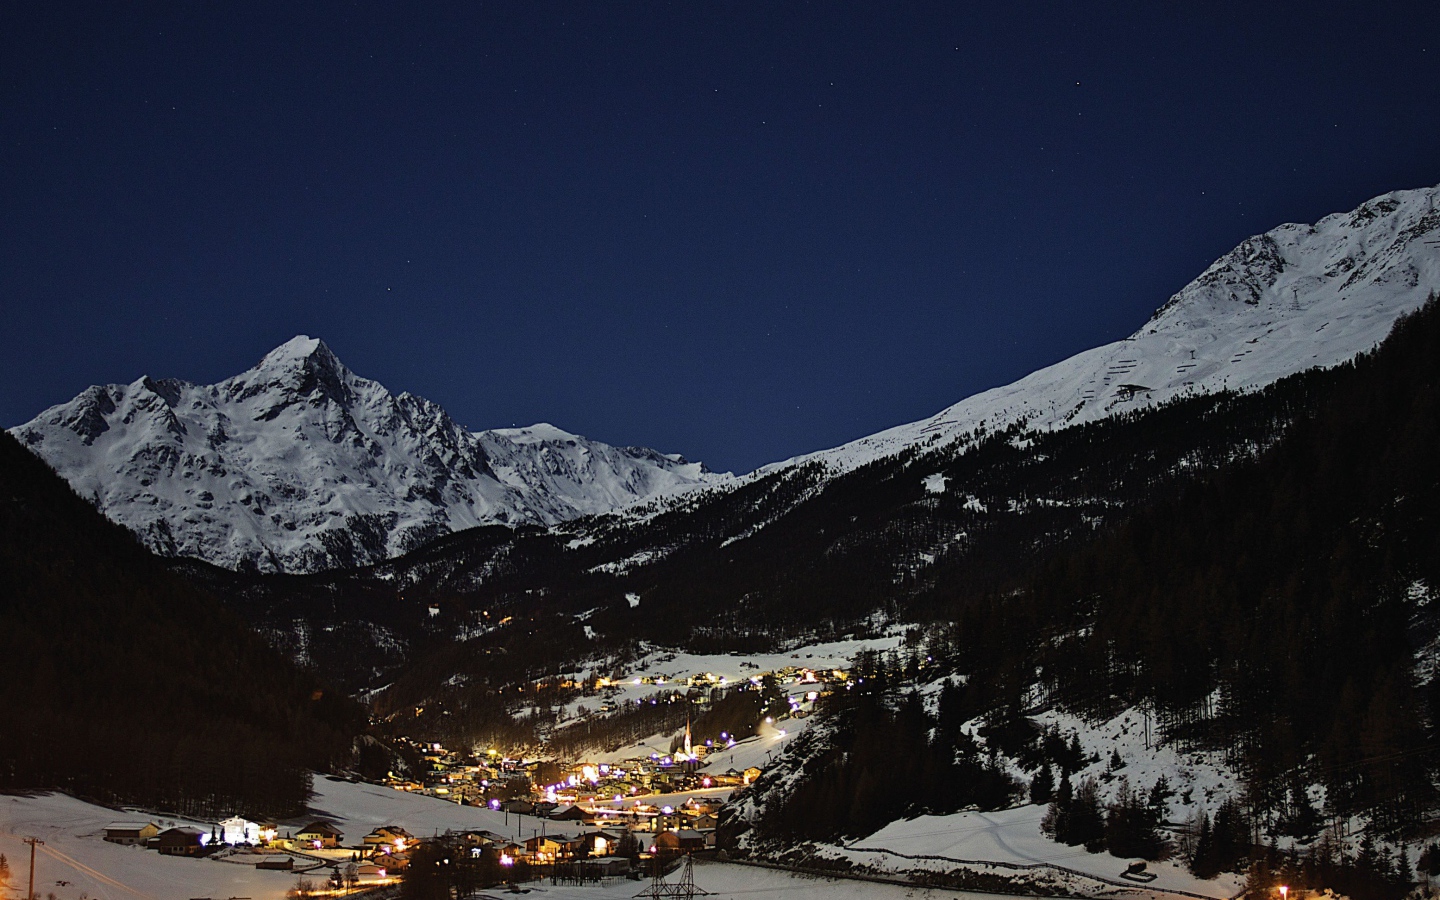 Night at the ski resort of Solden, Austria